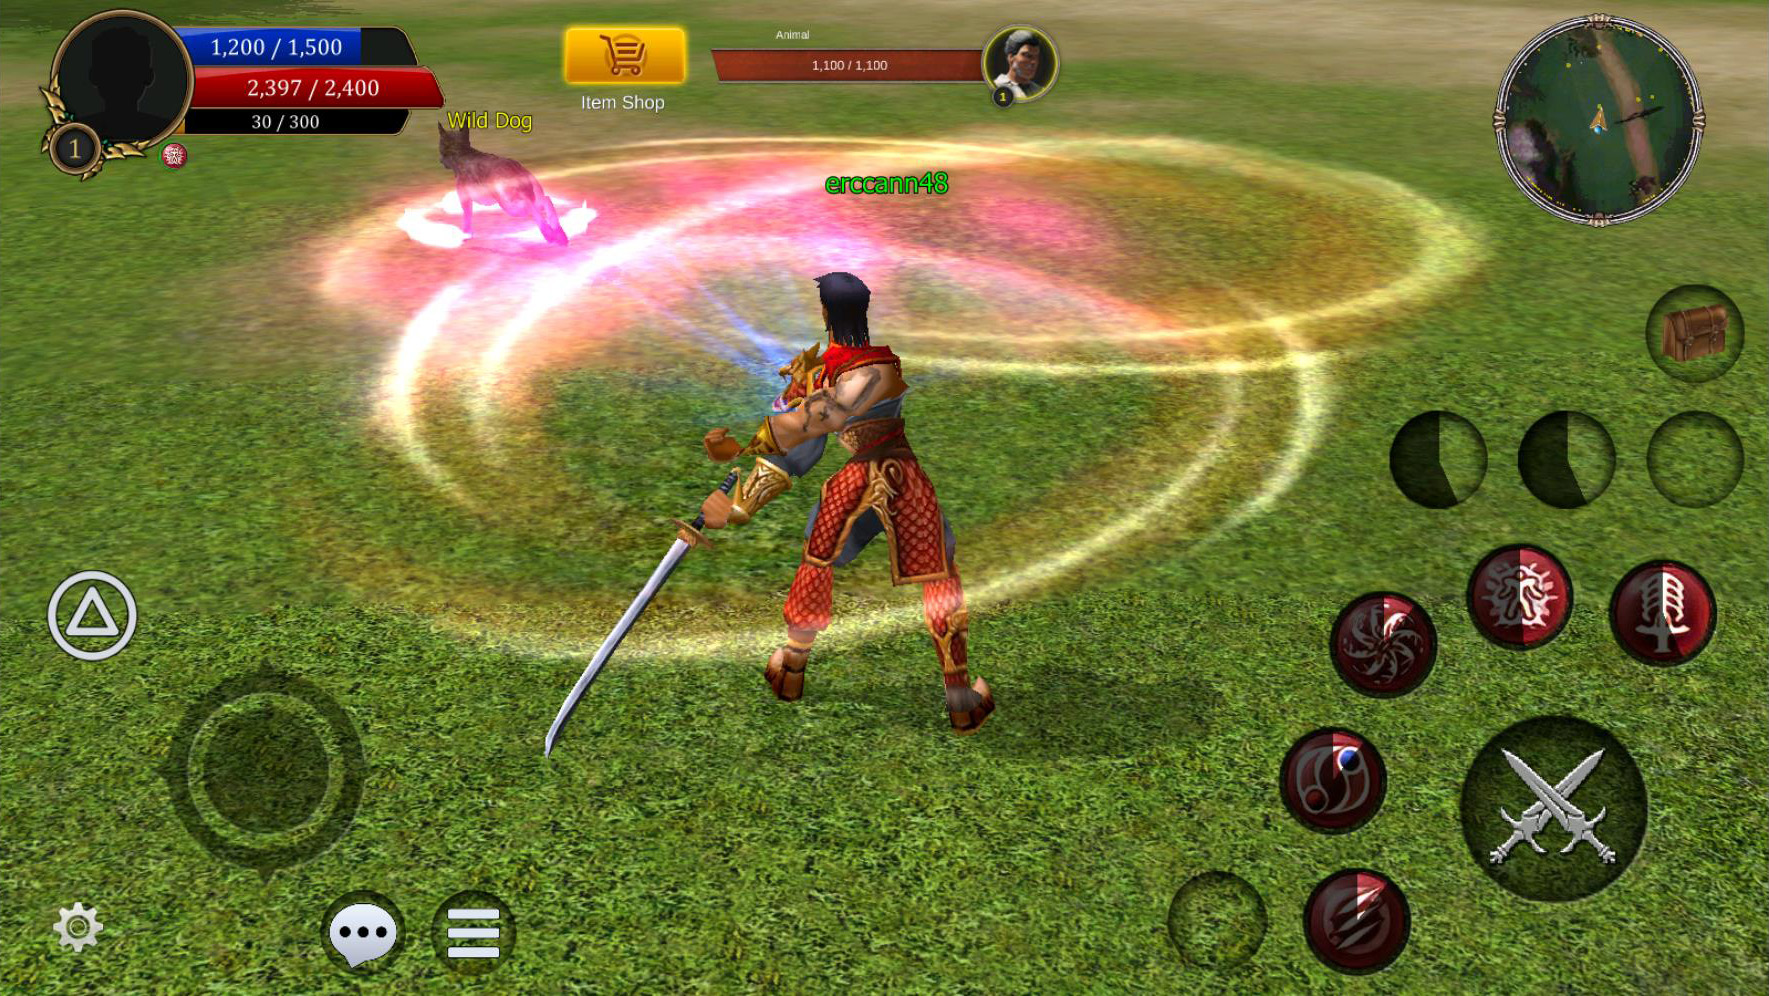 Metin 2 android mobile - gra fantasy MMORPG za darmo